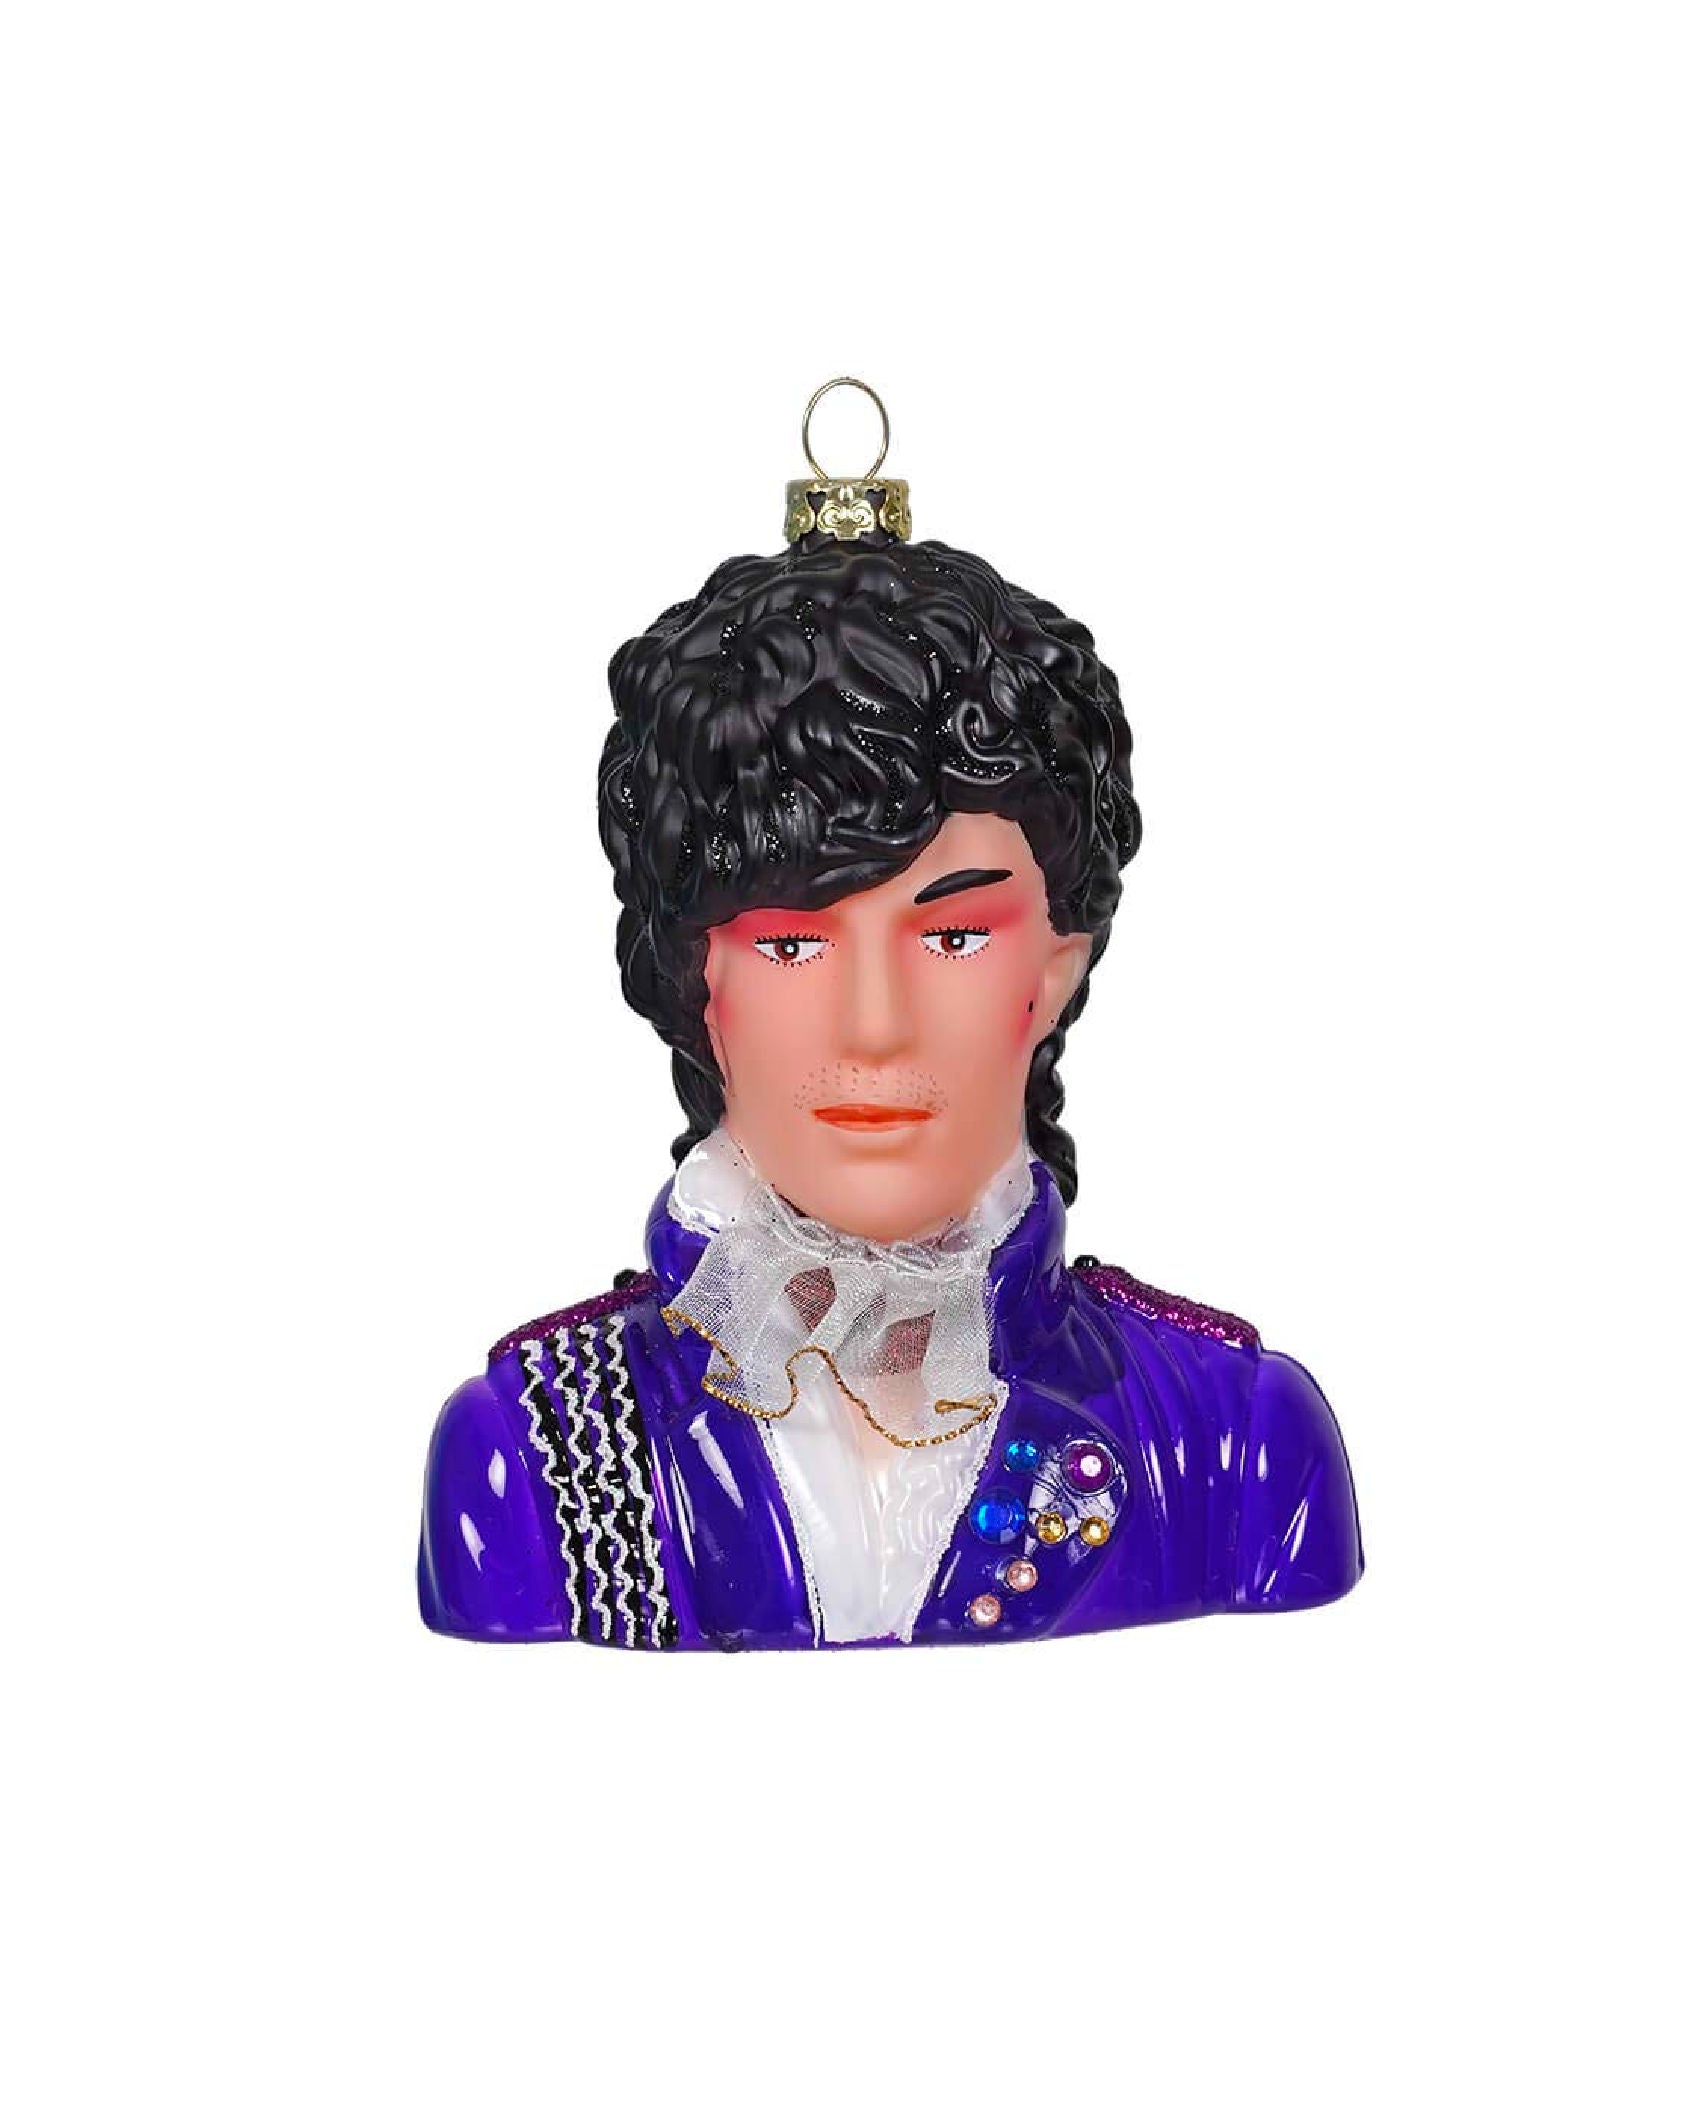 Prince Glass Ornament